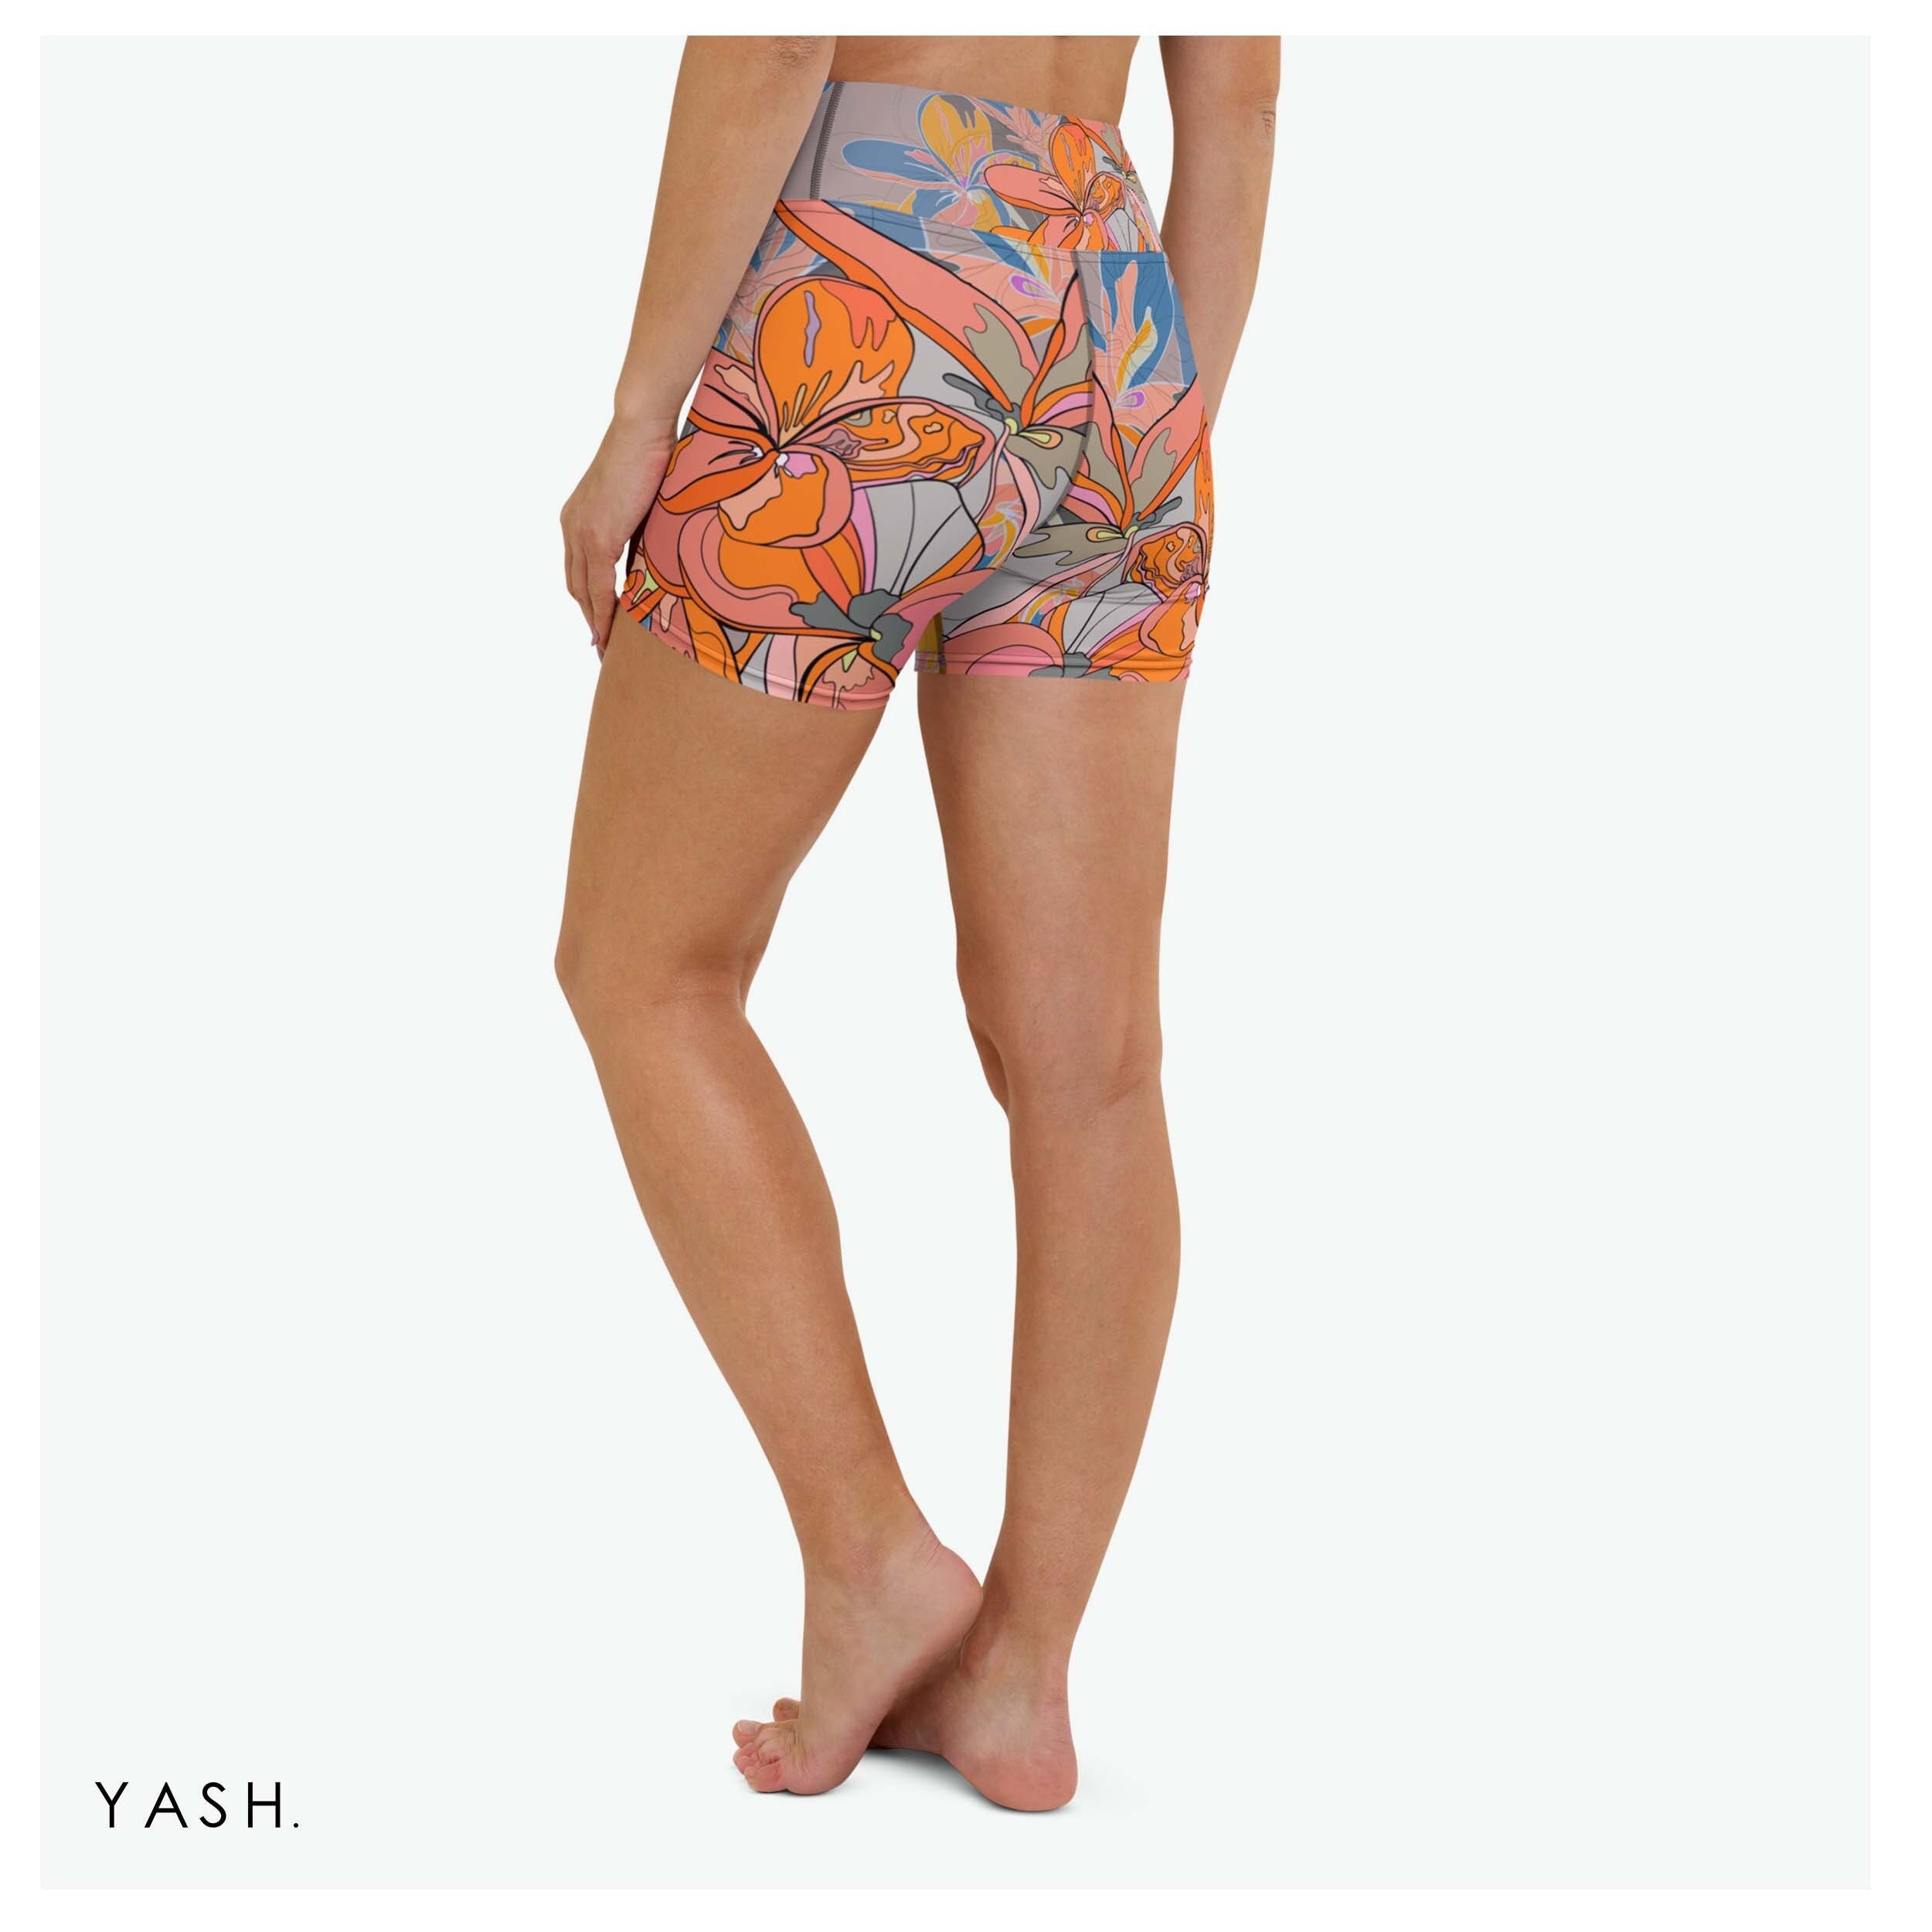 Yoga Short Leggings With Neon Flowers Print Athletic Shorts 